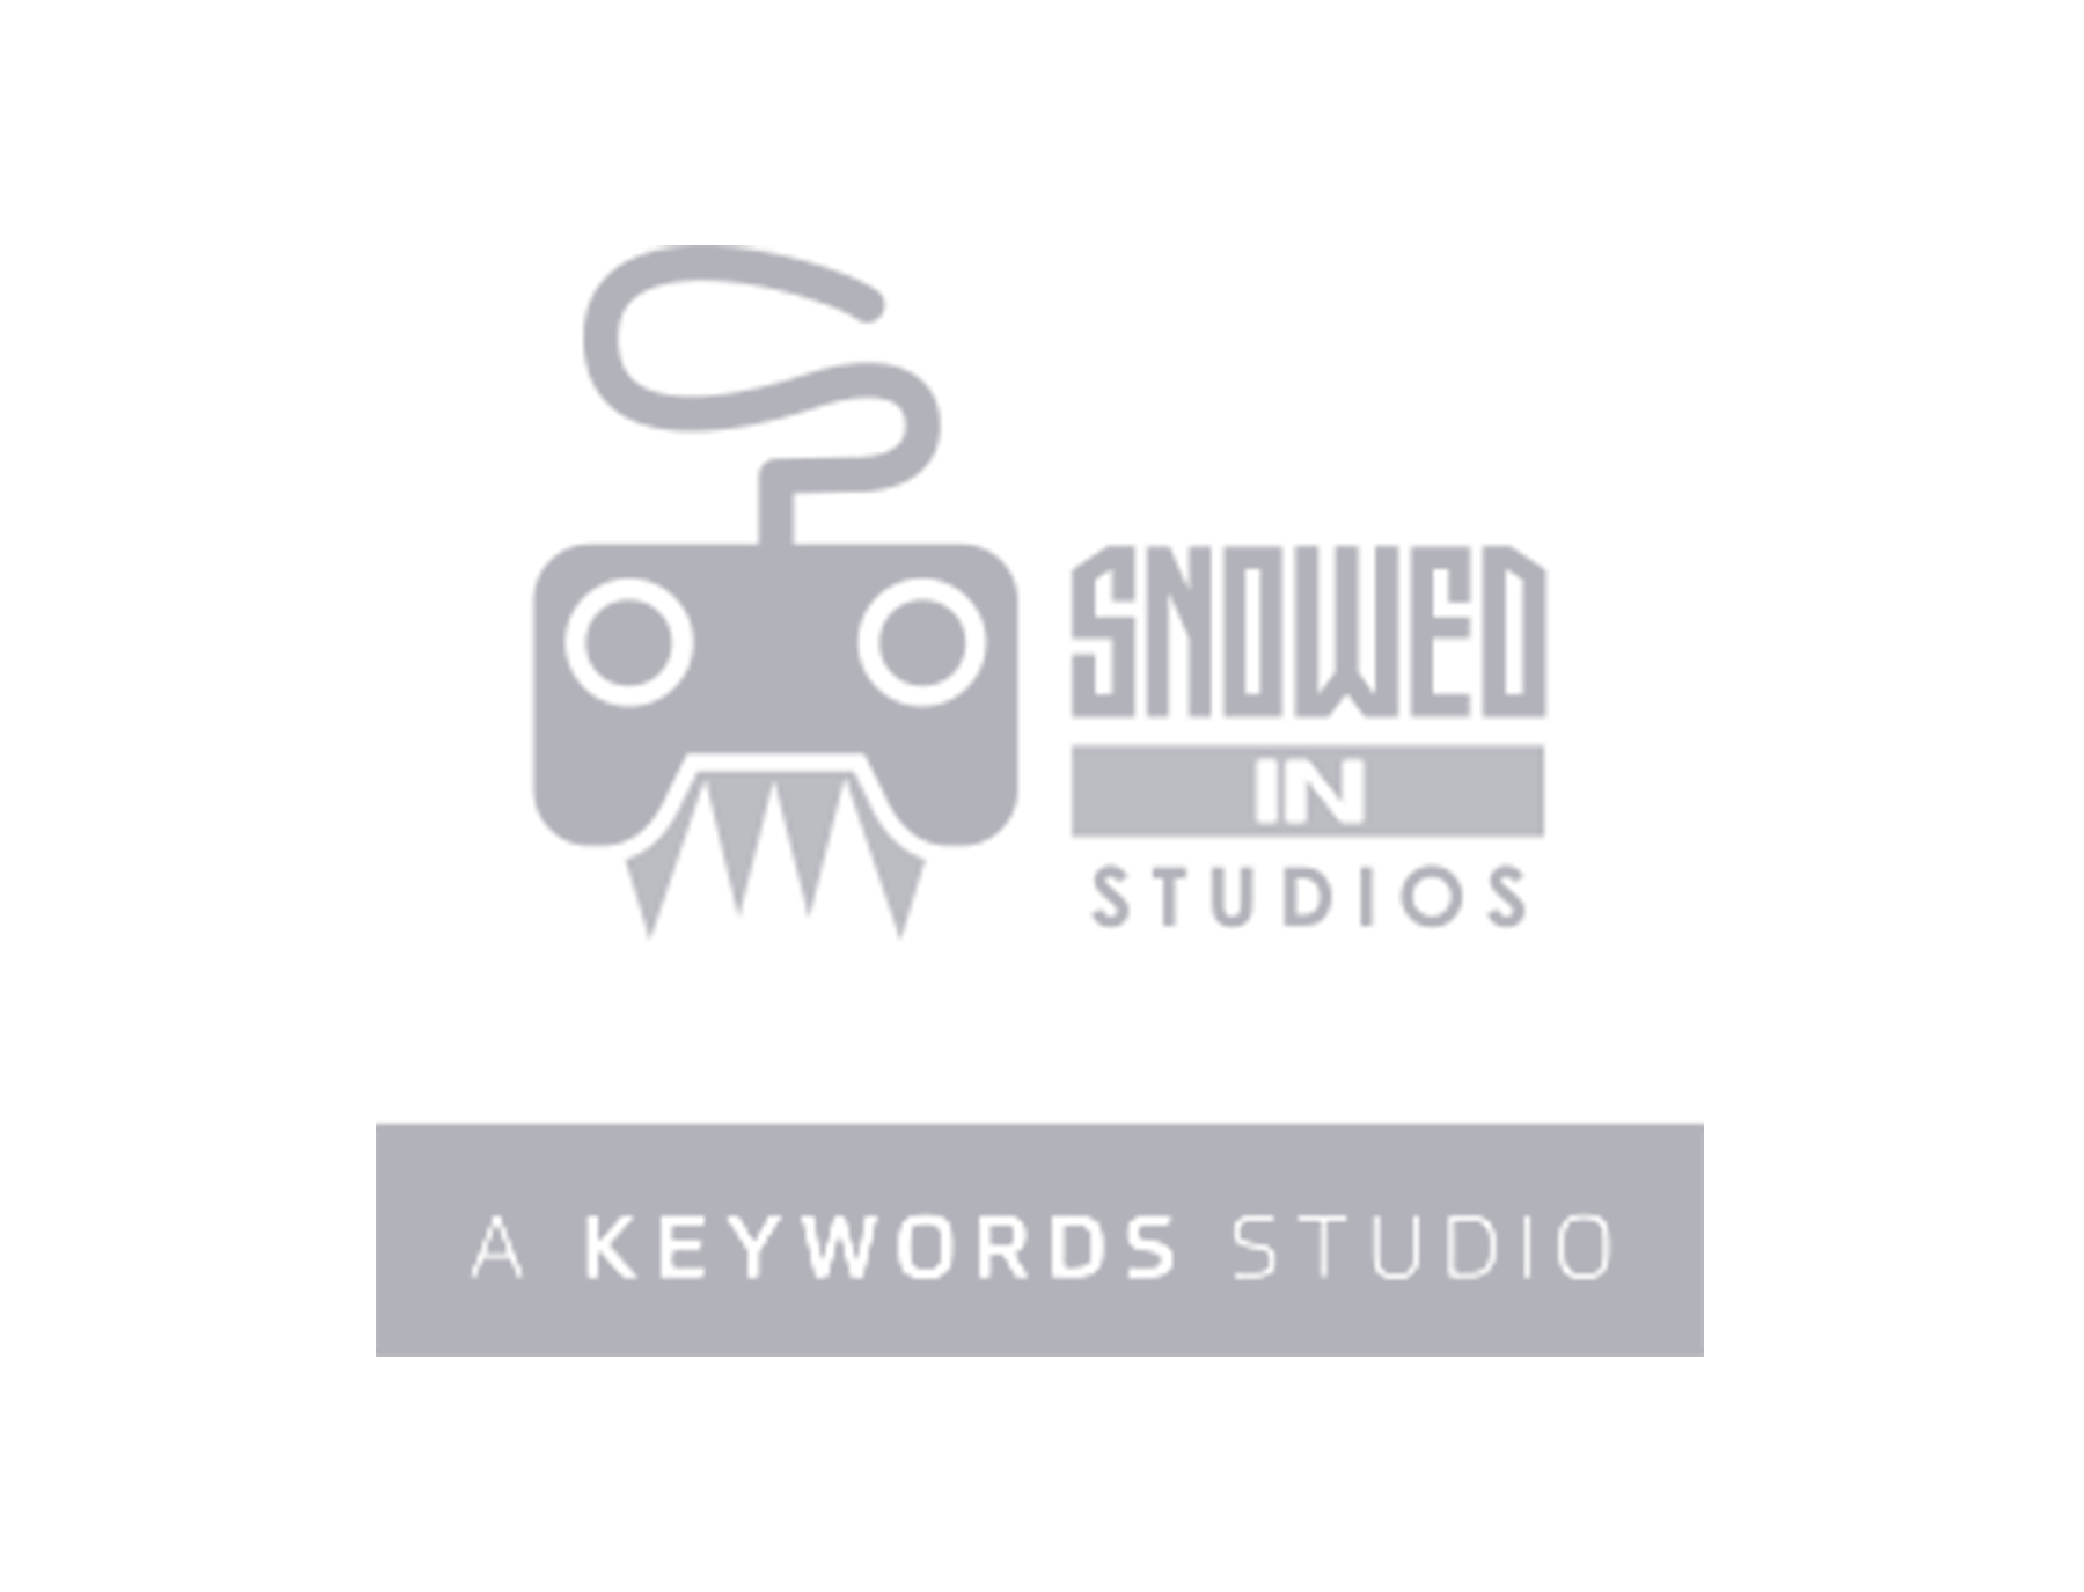 Snowed in Studios GameDev logo - trusted partners of 8Bit gaming industry recruitment